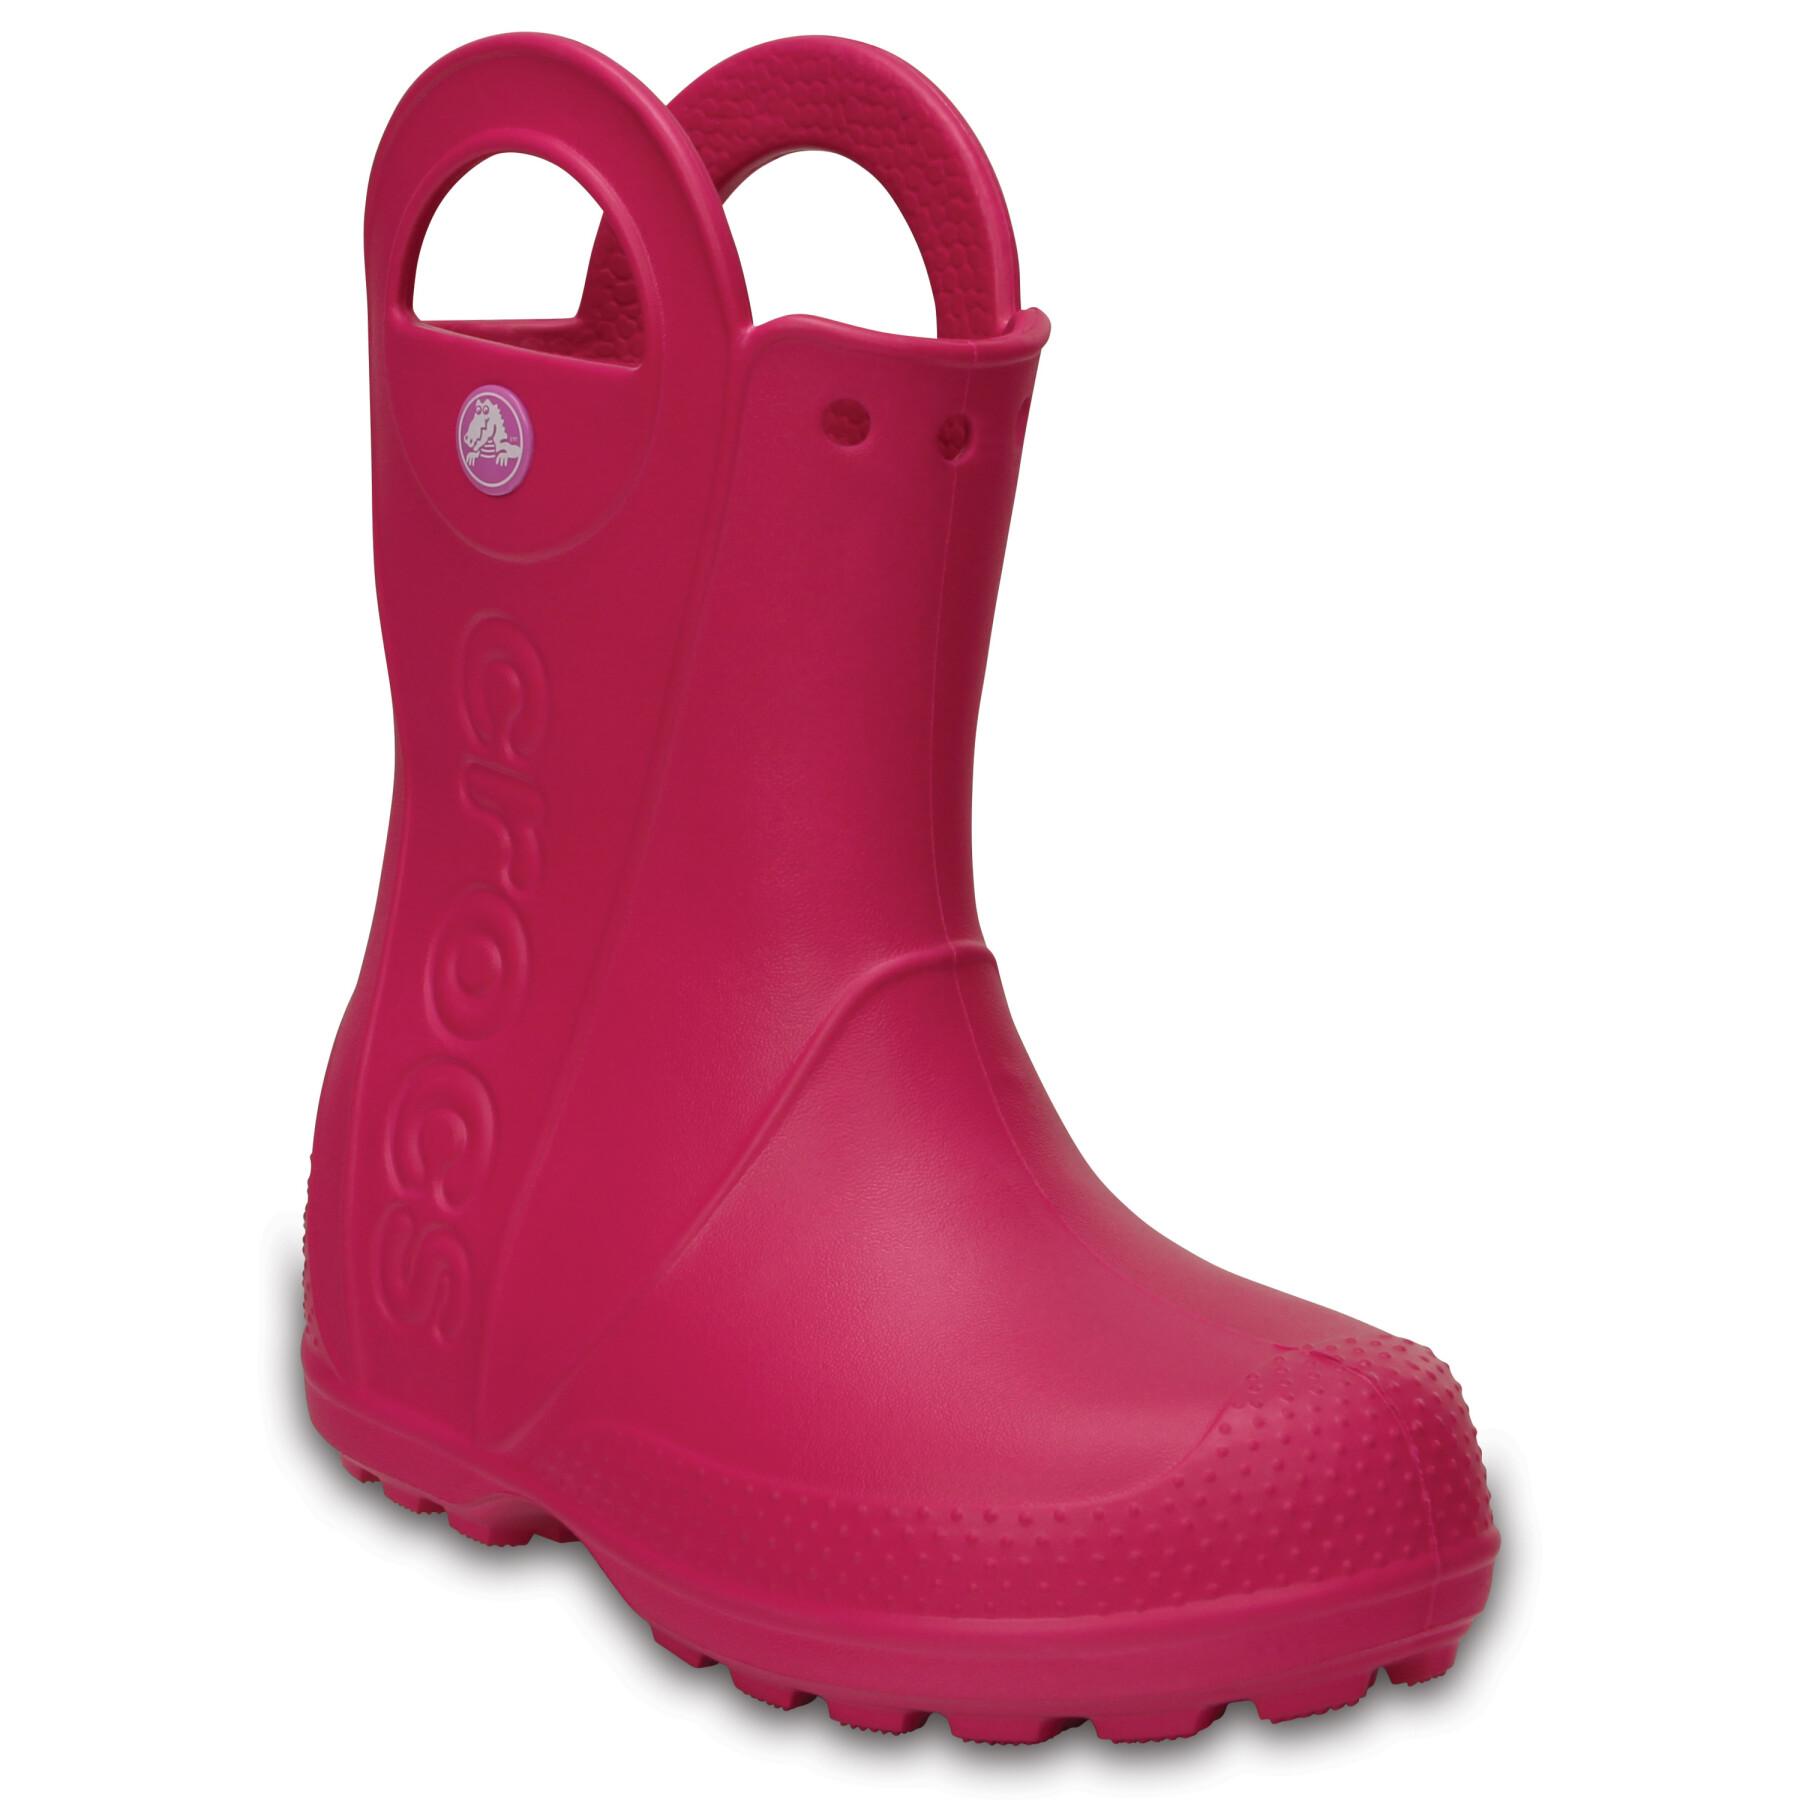 Children's rain boots Crocs handle it rain